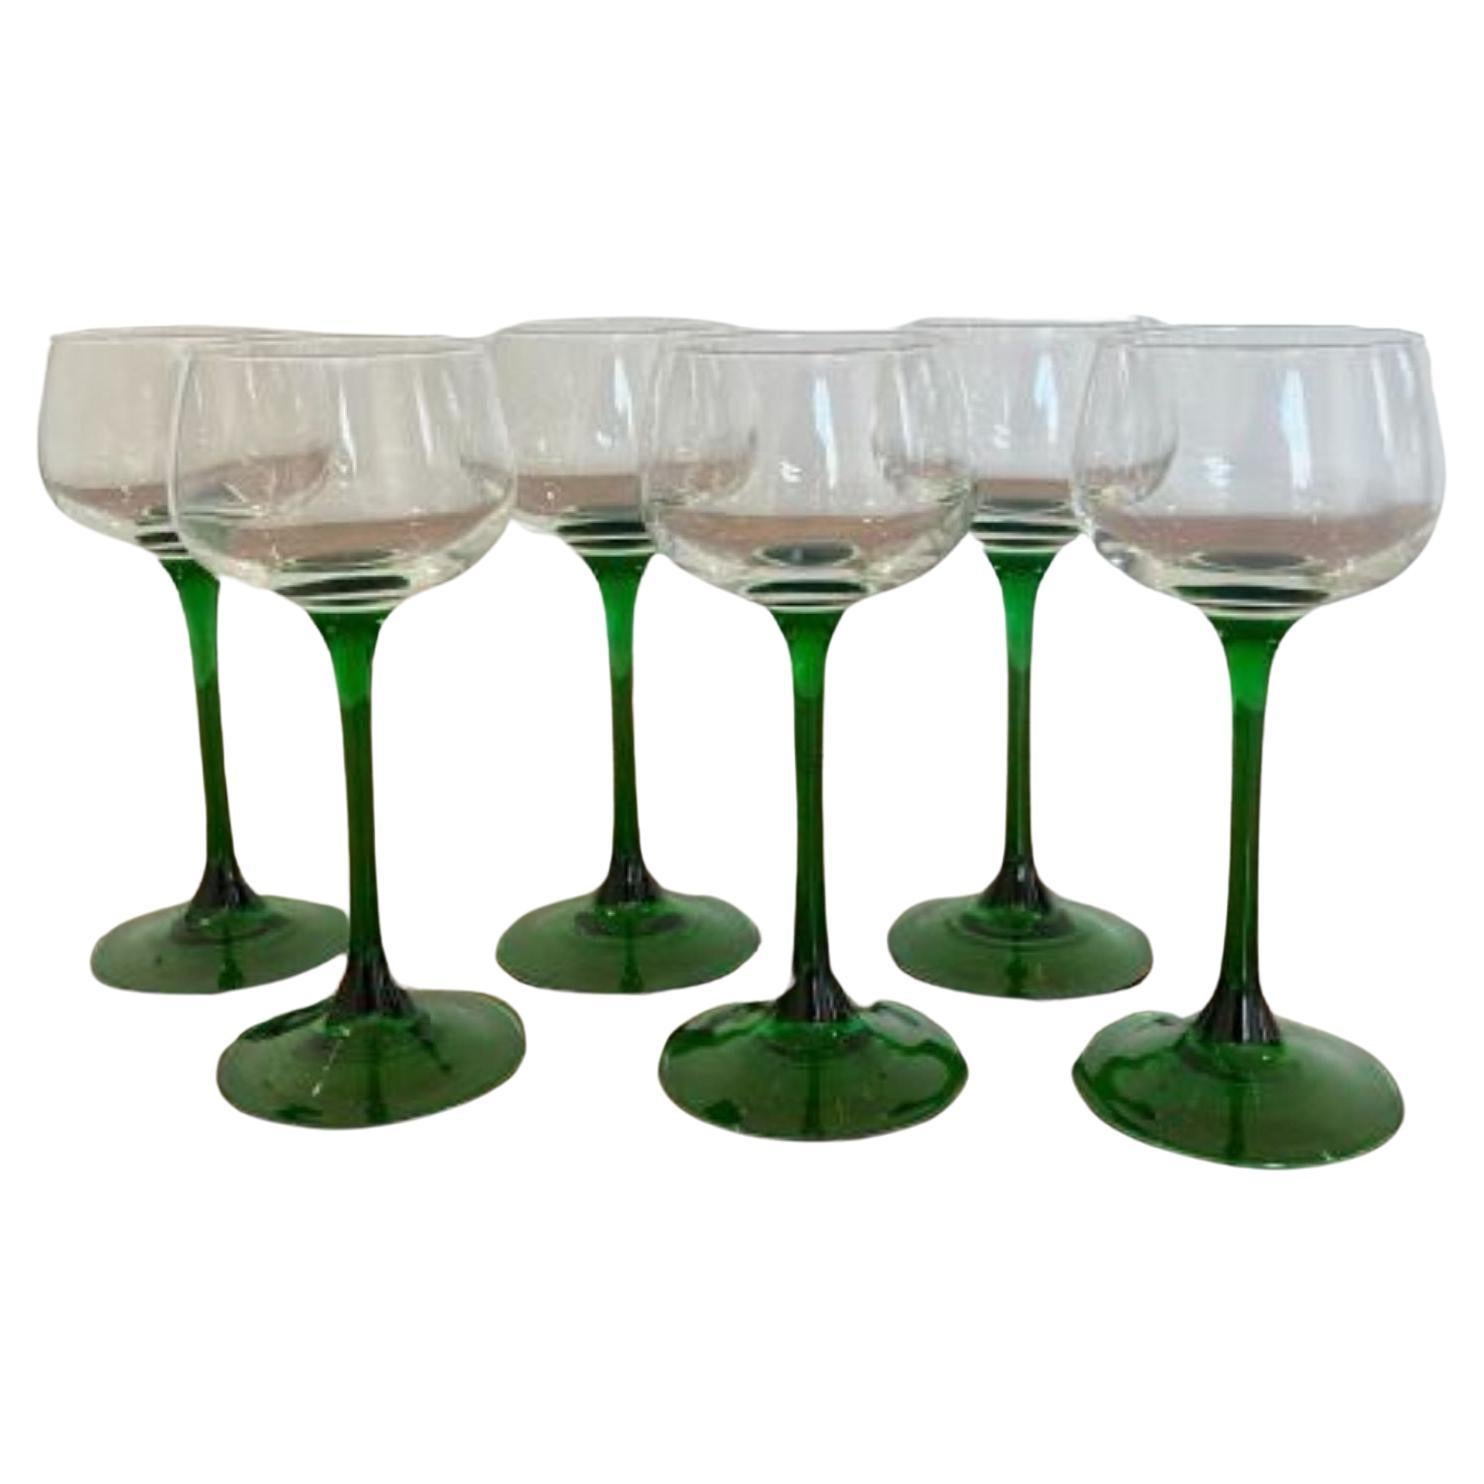 Set of six quality Edwardian wine glasses